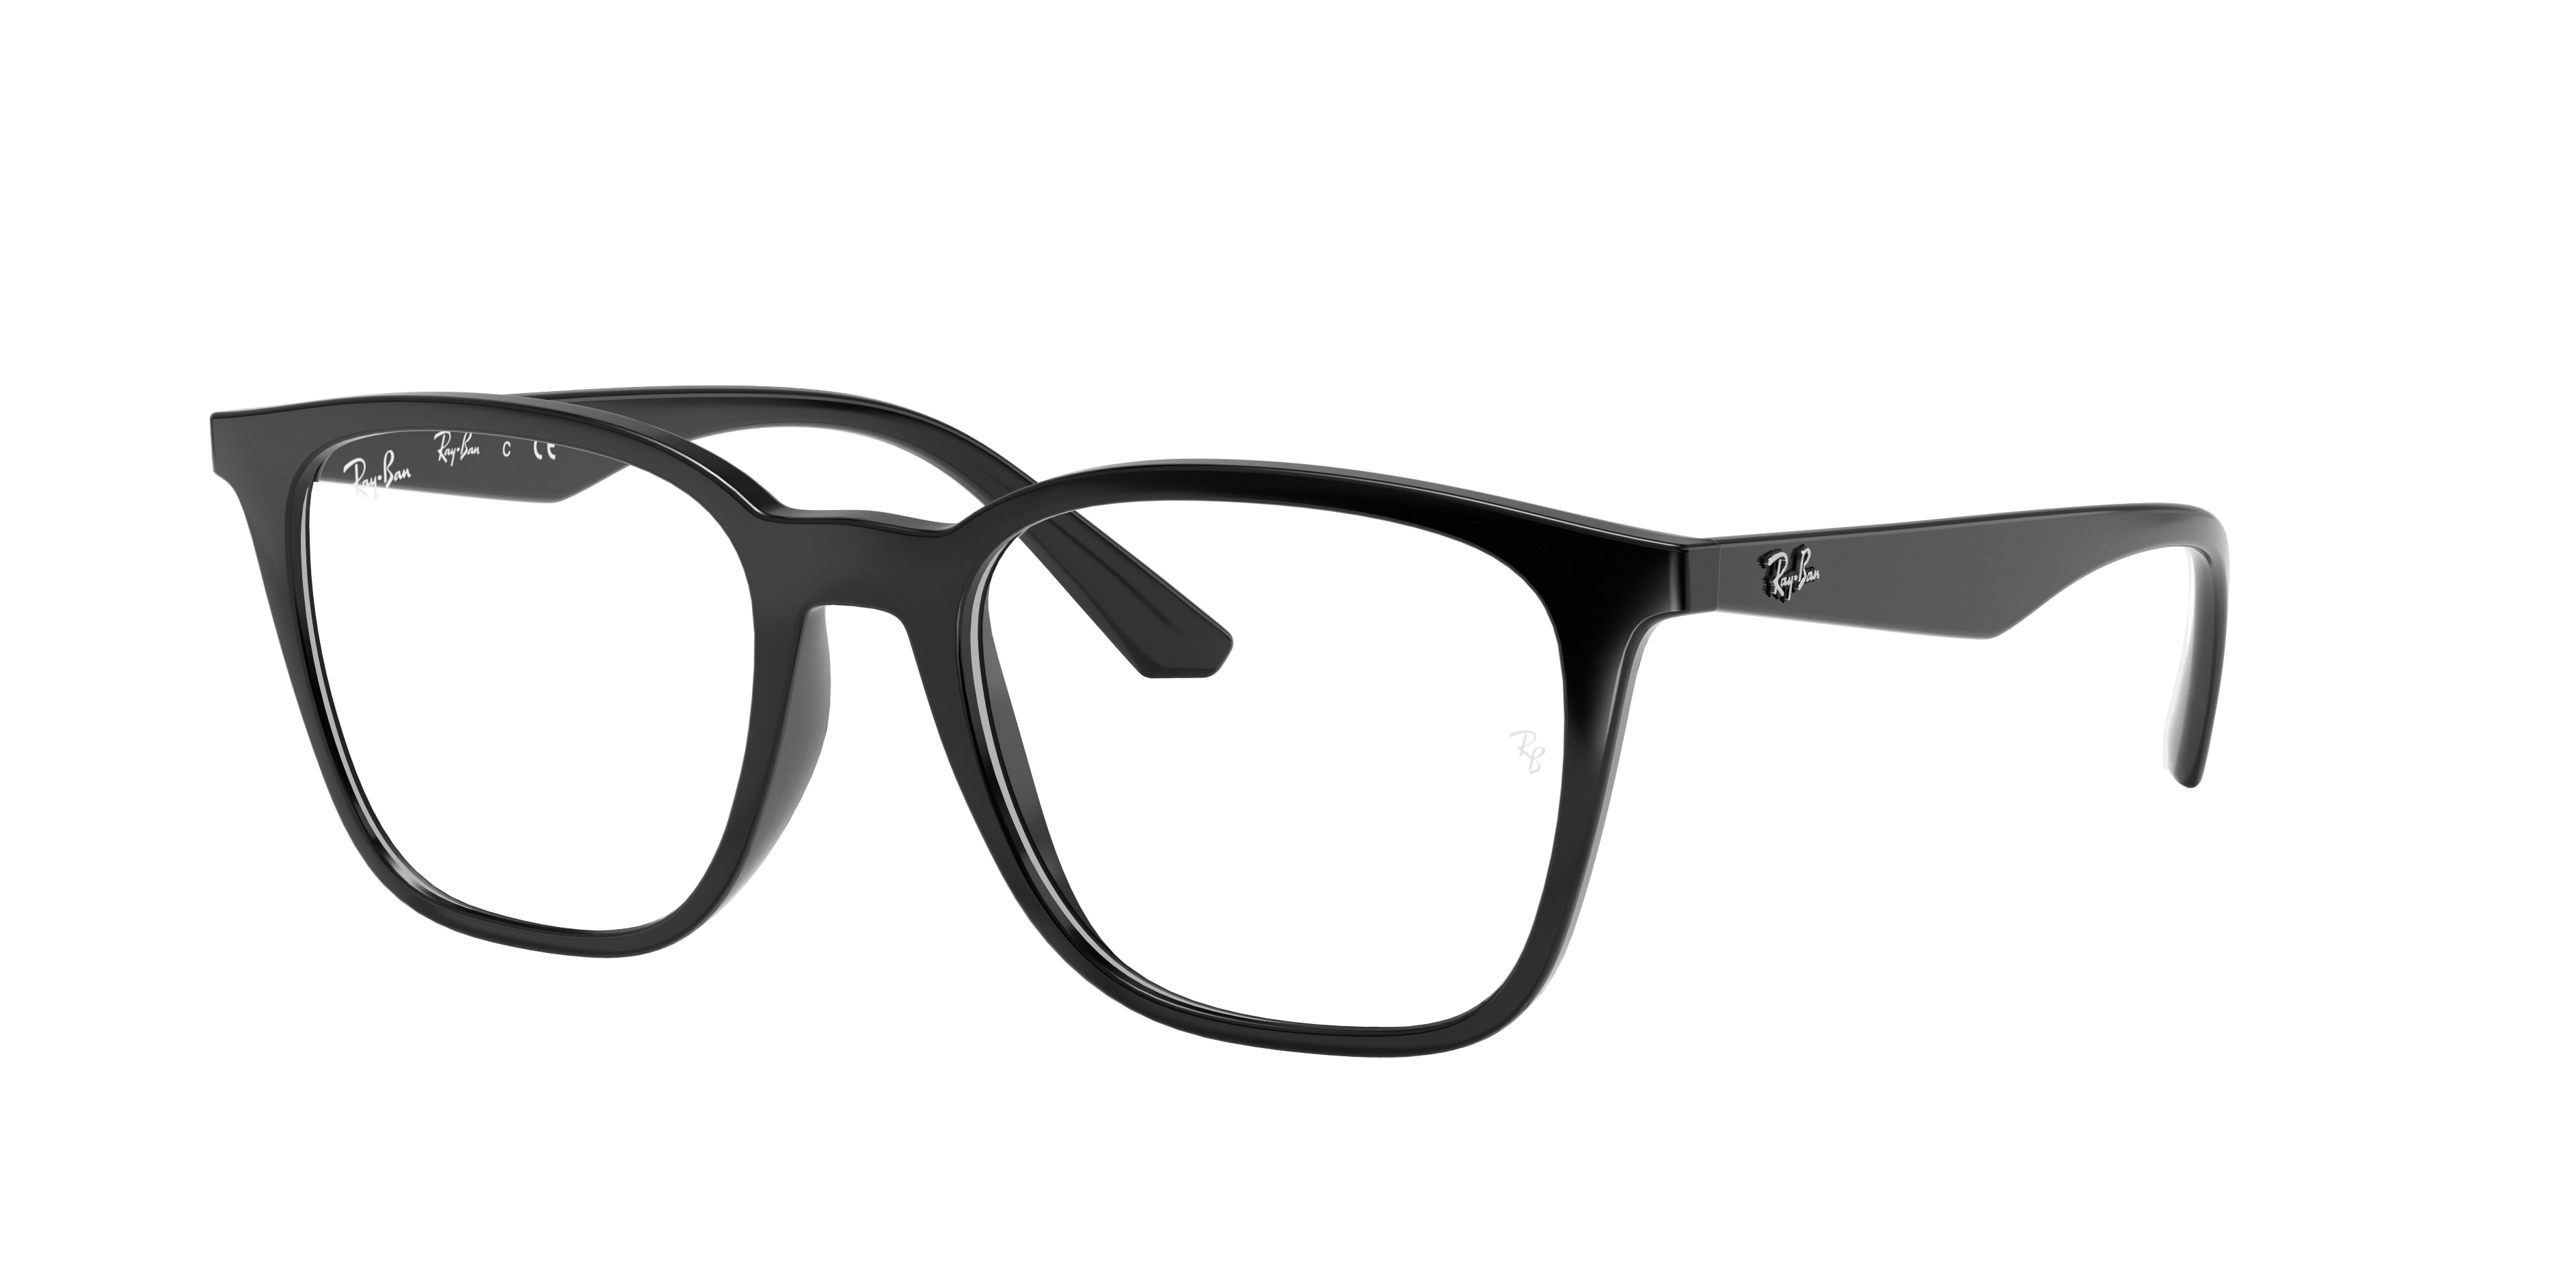 Rb7177 Eyeglasses with Black Frame - RB7177F | Ray-Ban®